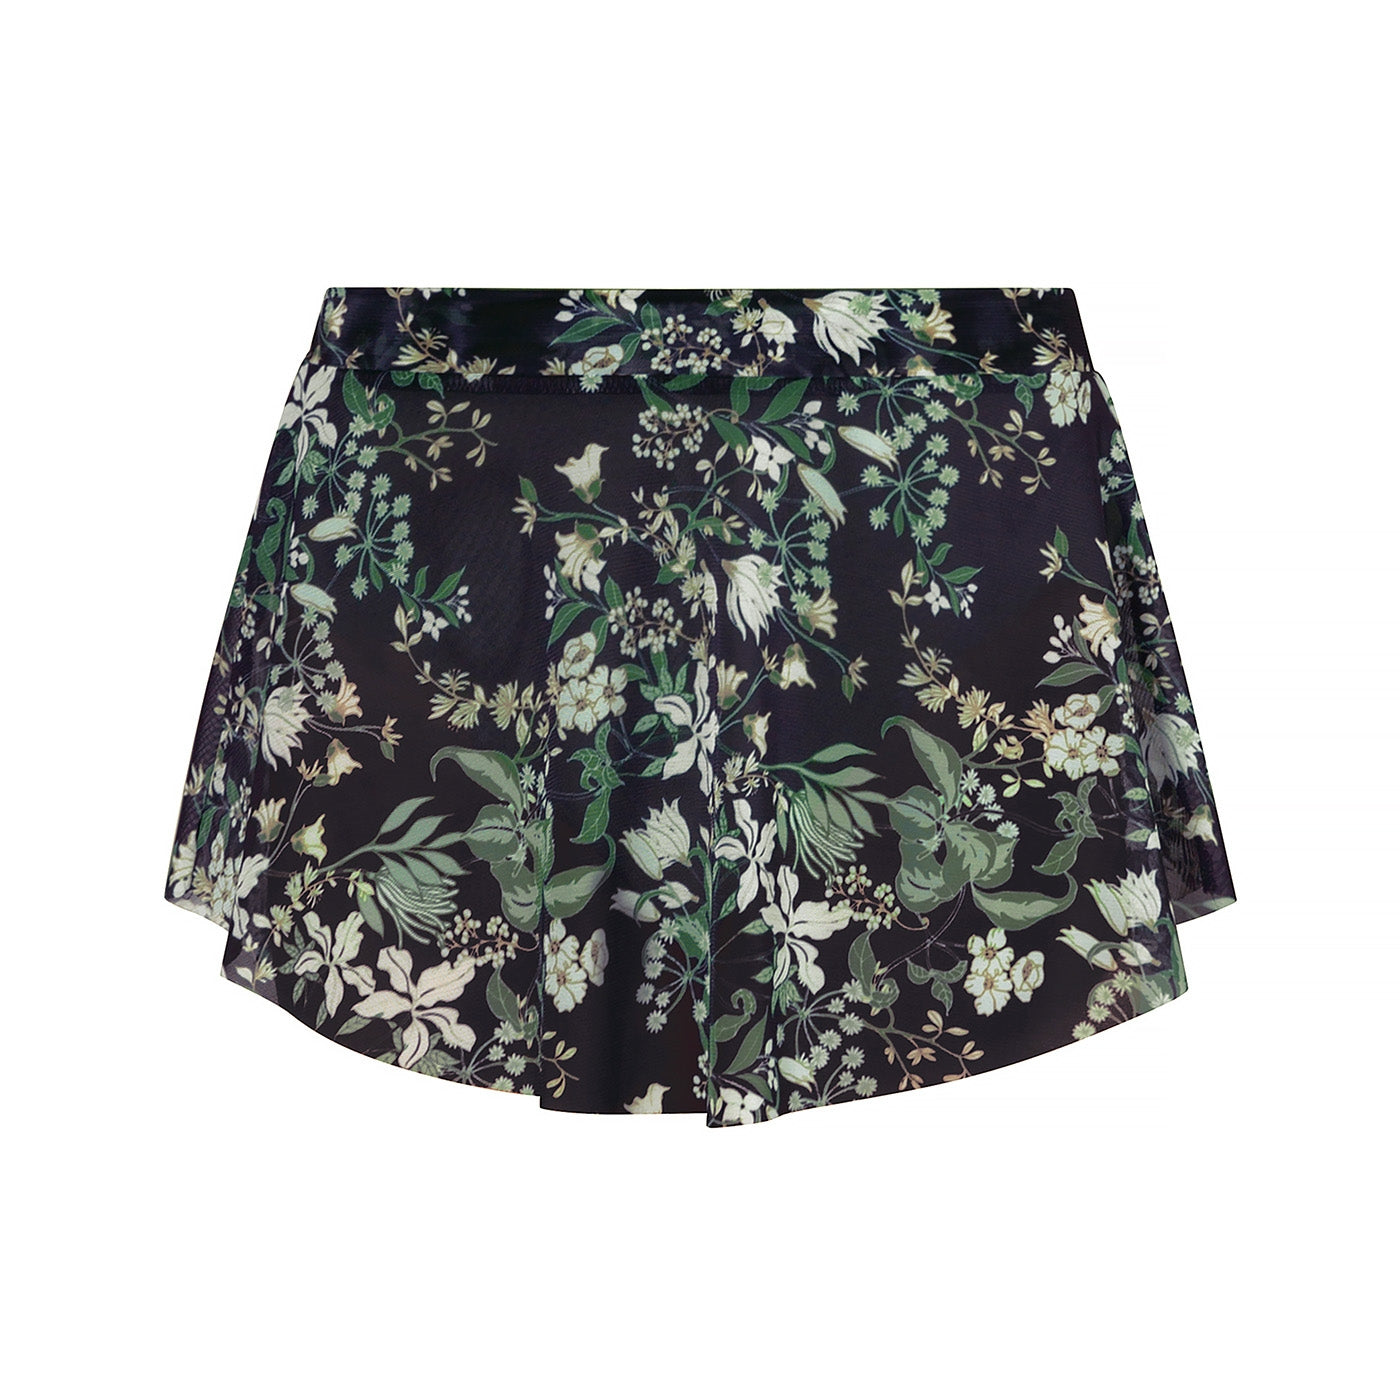 Natalia Mesh Skirt, Botanica Collection - 3 Beautiful Colours!